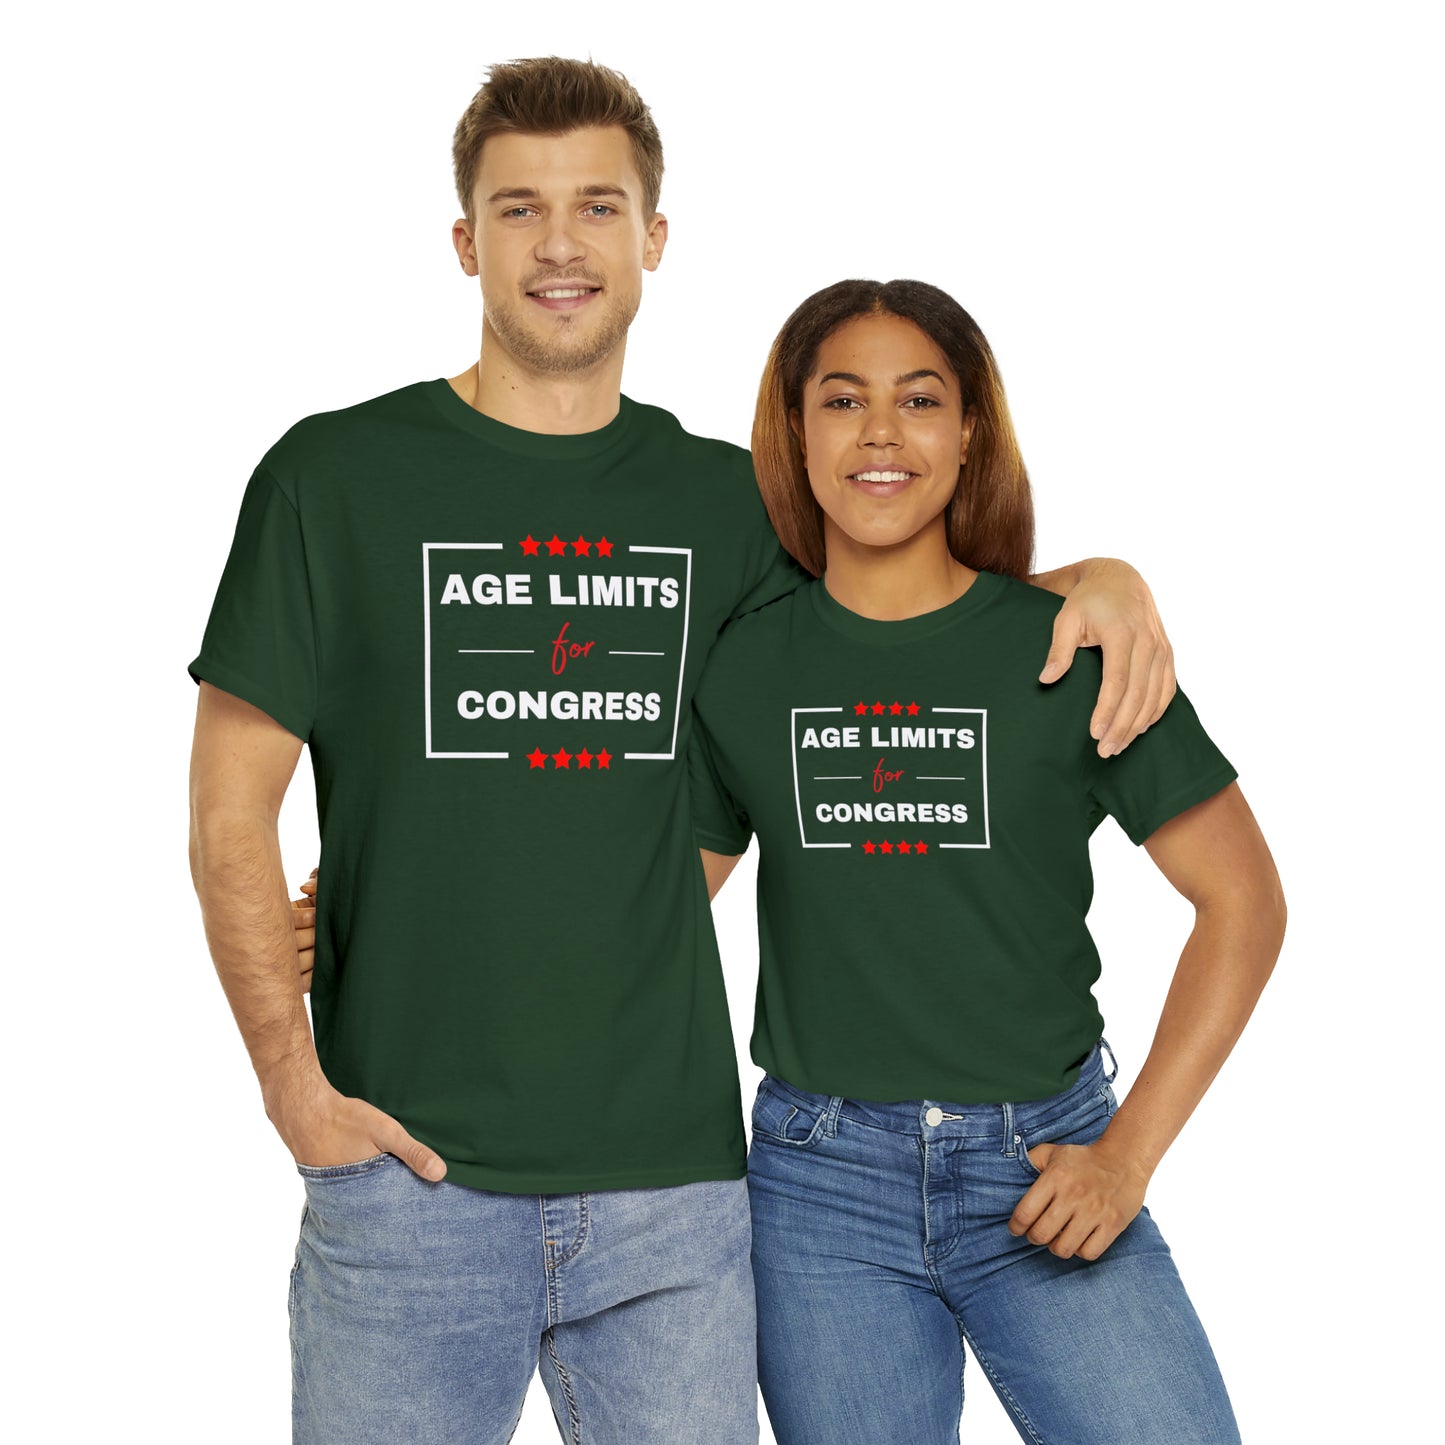 T-Shirt - Age Limits (Congress)